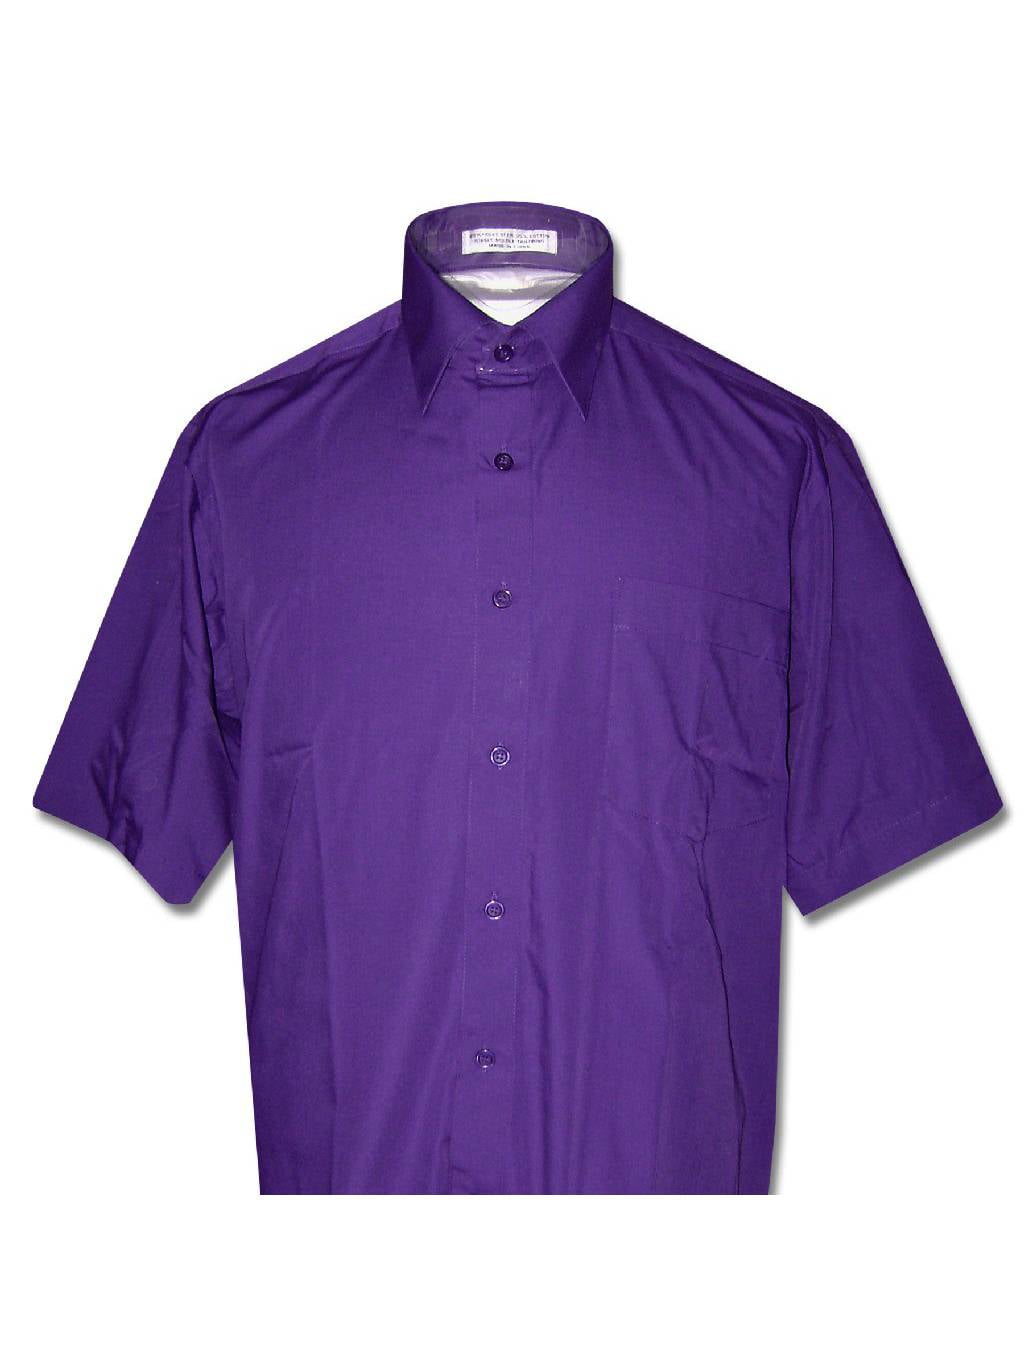 Covona Men's Short Sleeve Solid PURPLE INDIGO Color Dress Shirt 